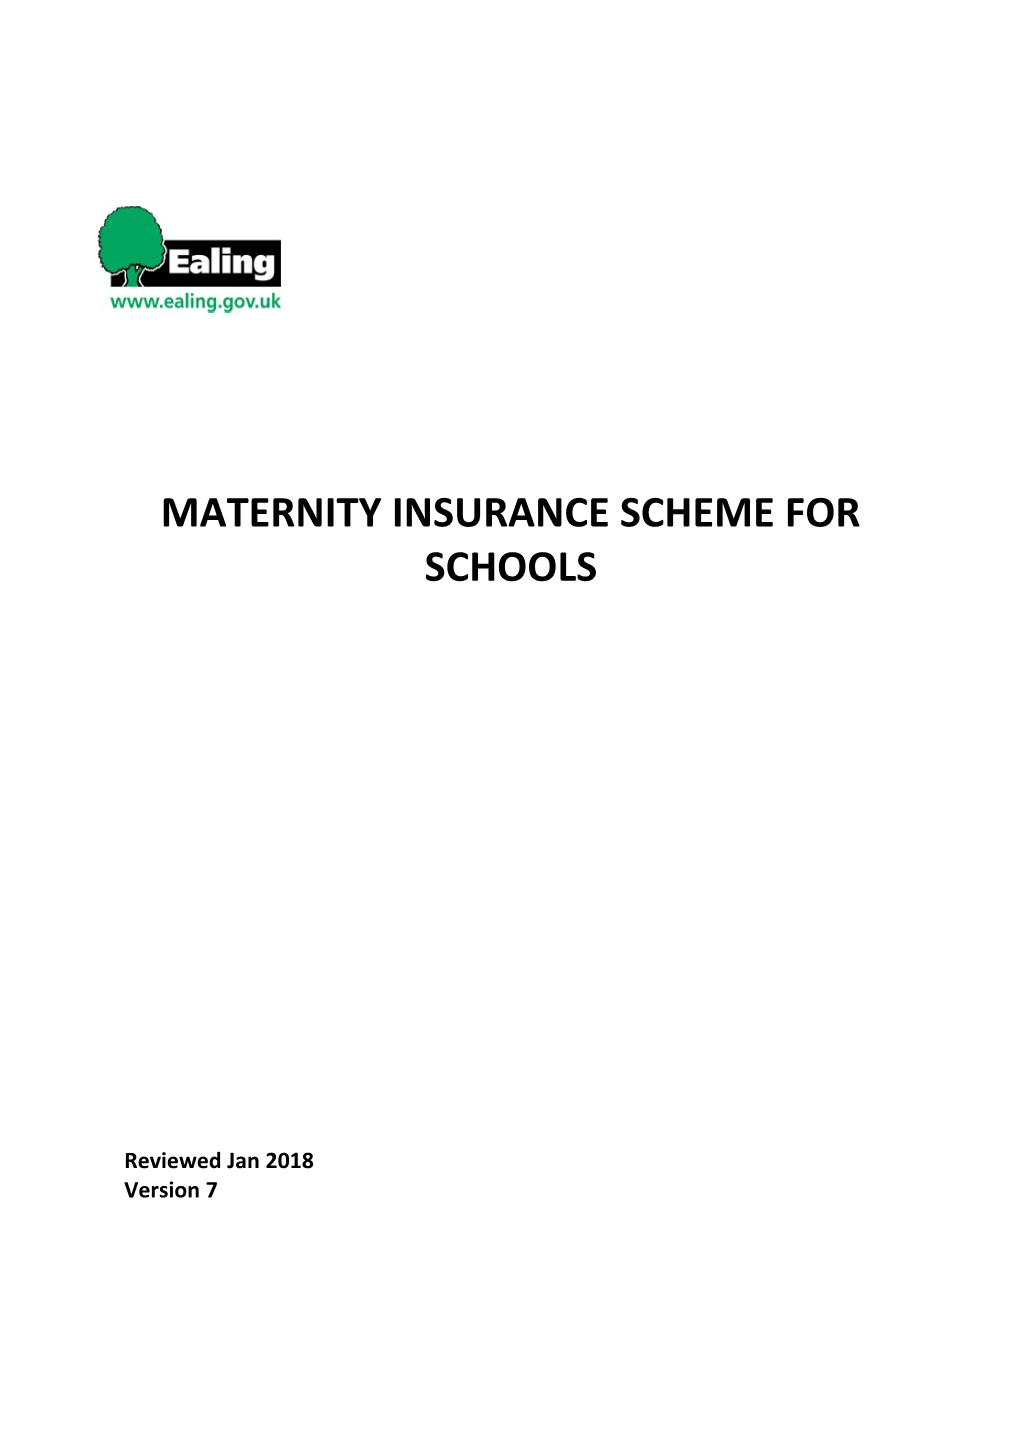 Maternity Insurance Scheme for Schools